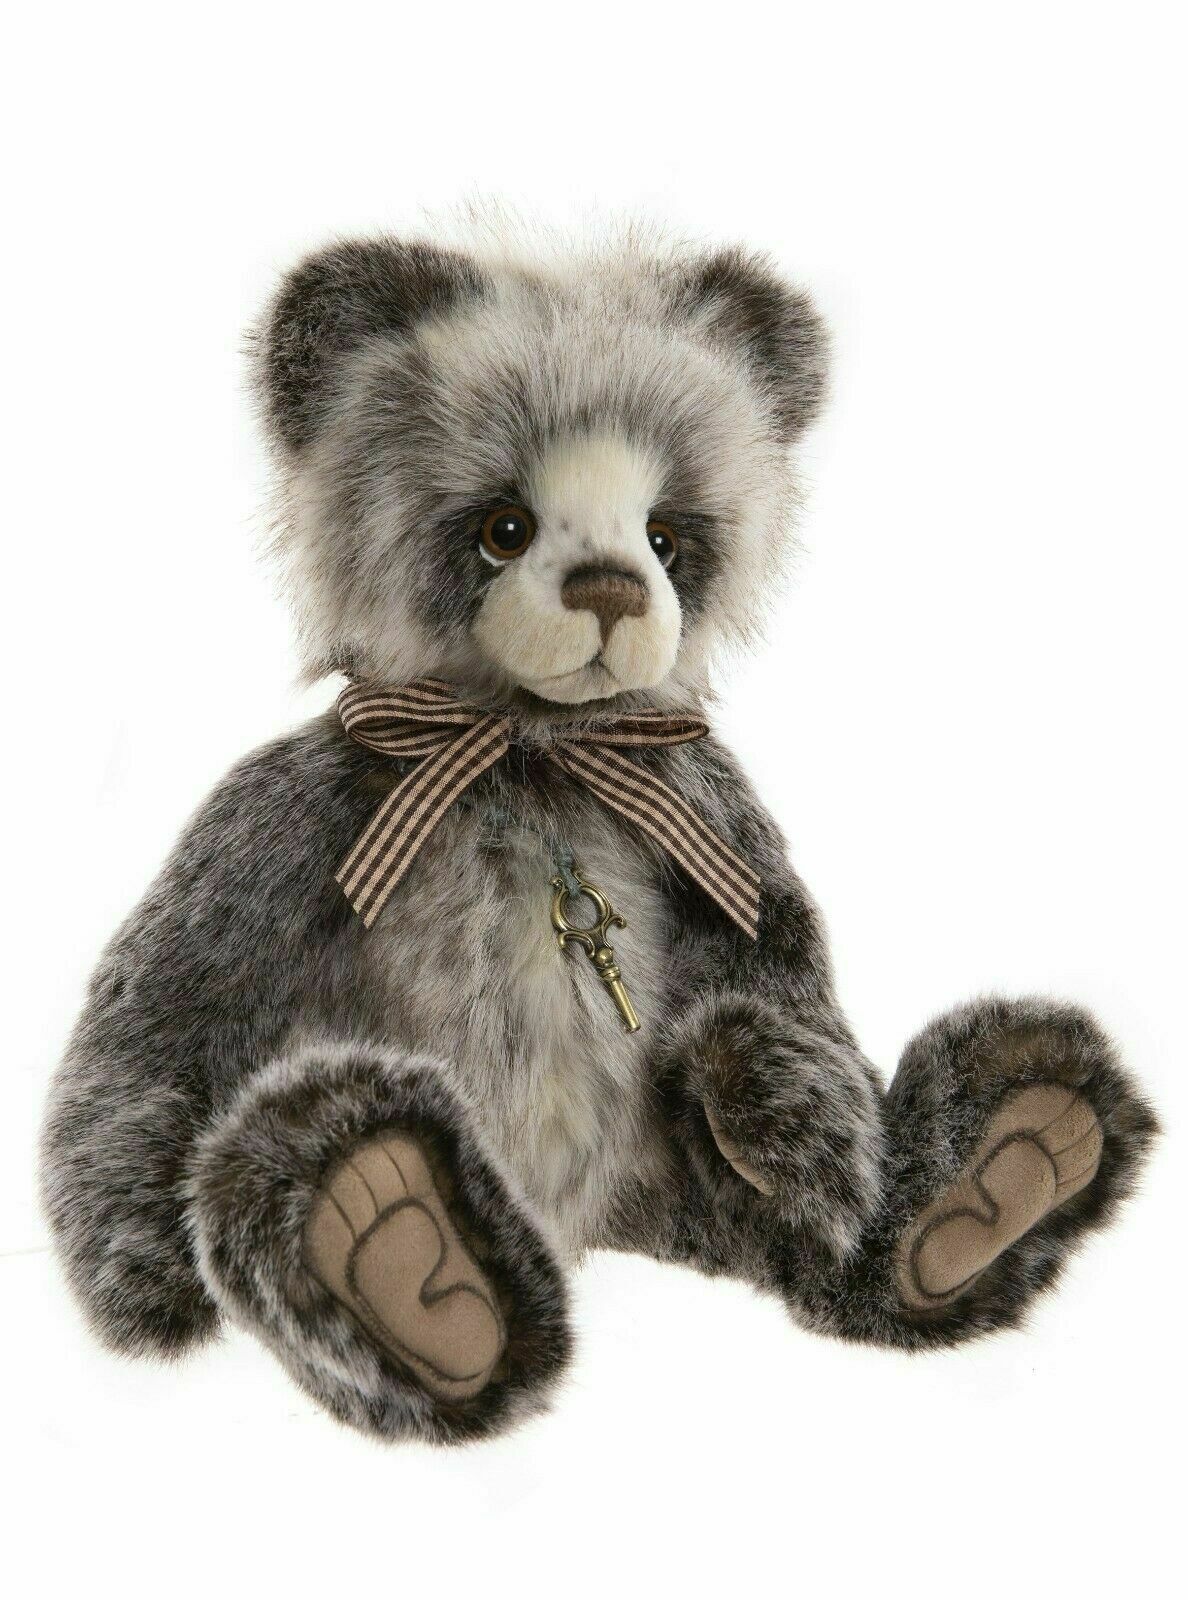 Charlie Bears Kingsley CB212131A grau/creme 36 cm - für Kinder und Sammler ab 3 Jahre